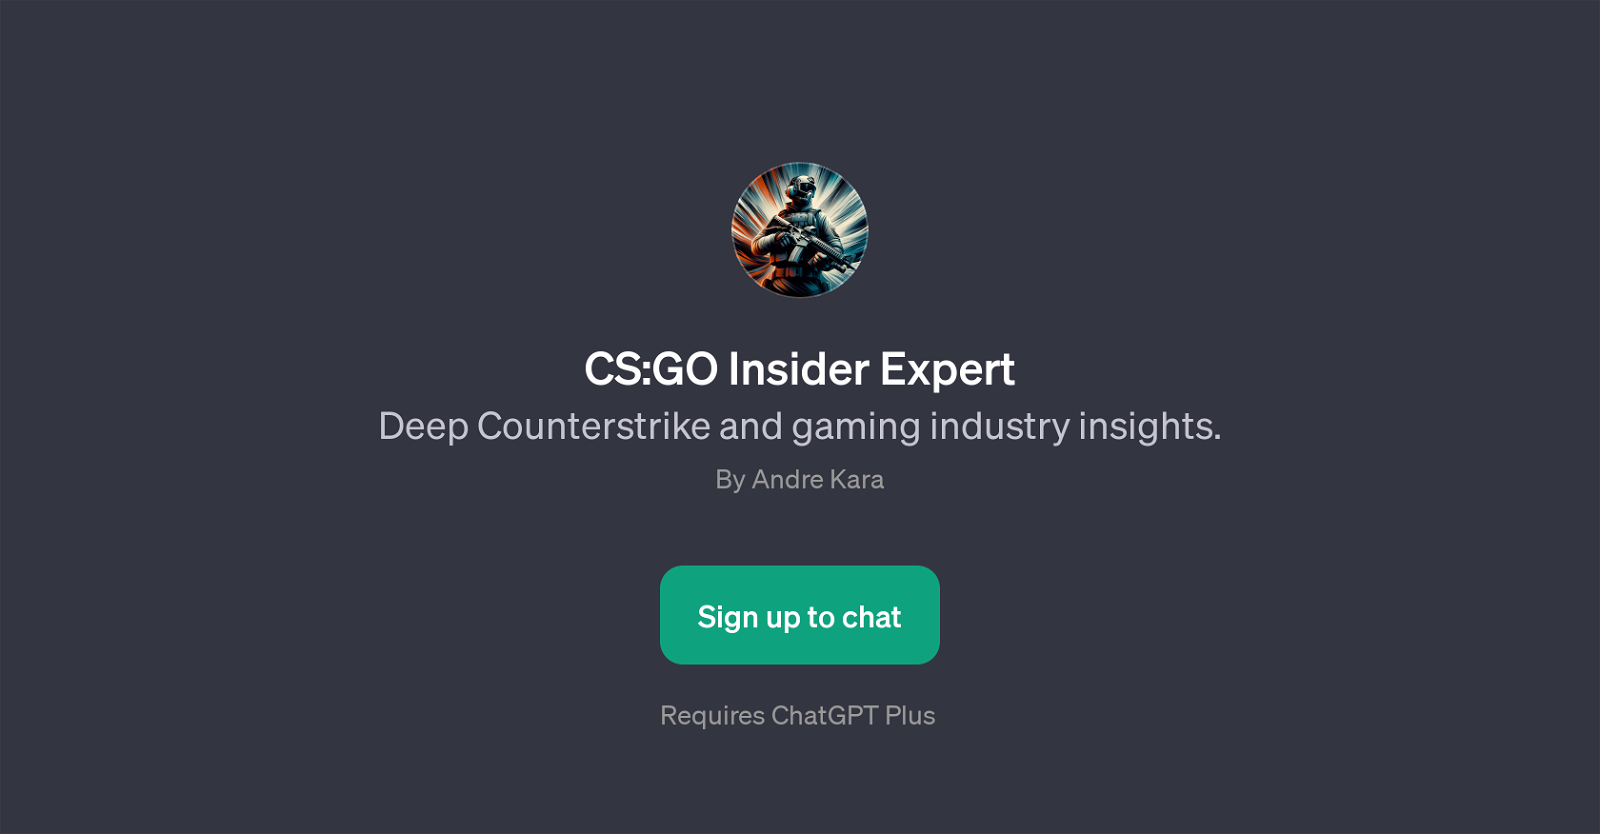 CS:GO Insider Expert website